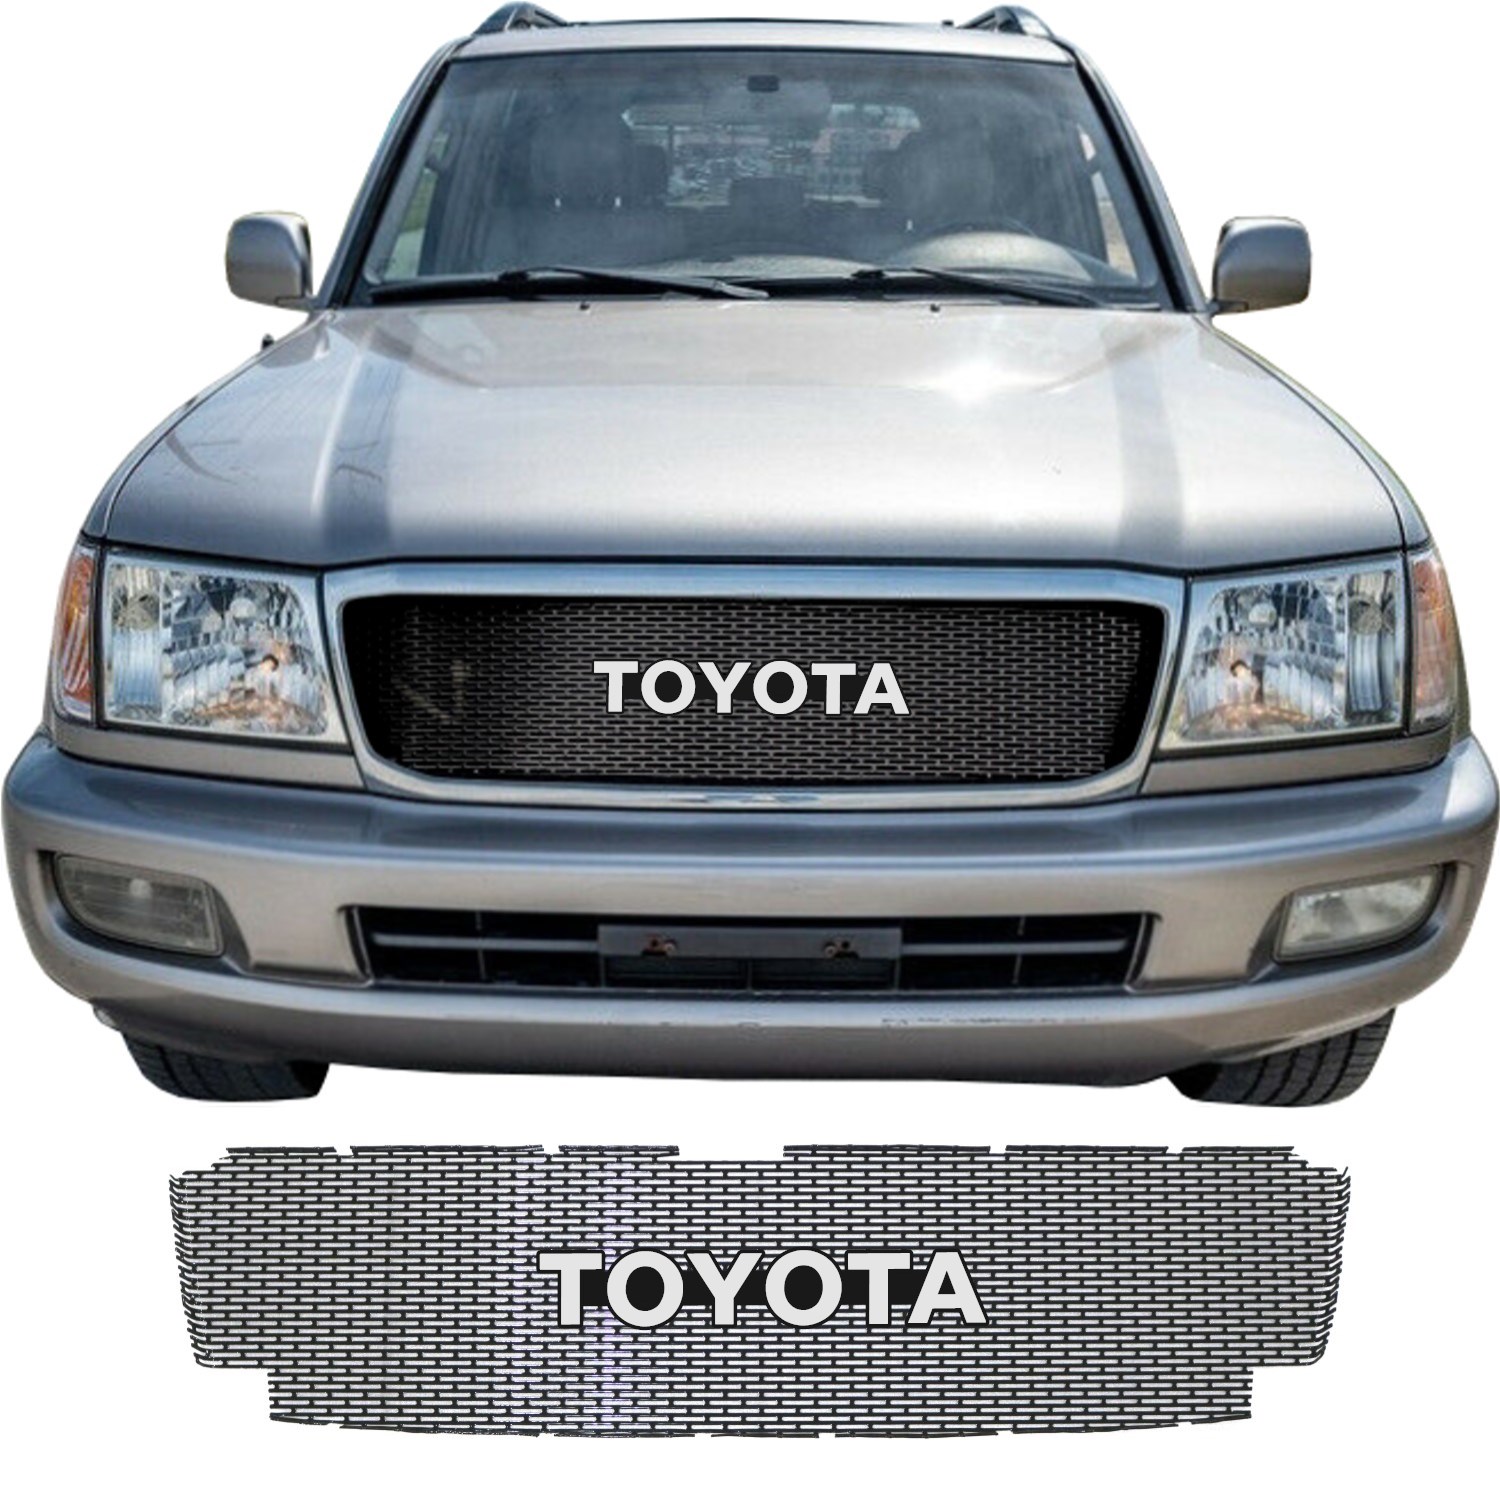 2003 - 2005 Toyota Land Cruiser Series 100 Grill Mesh and Toyota Emblem